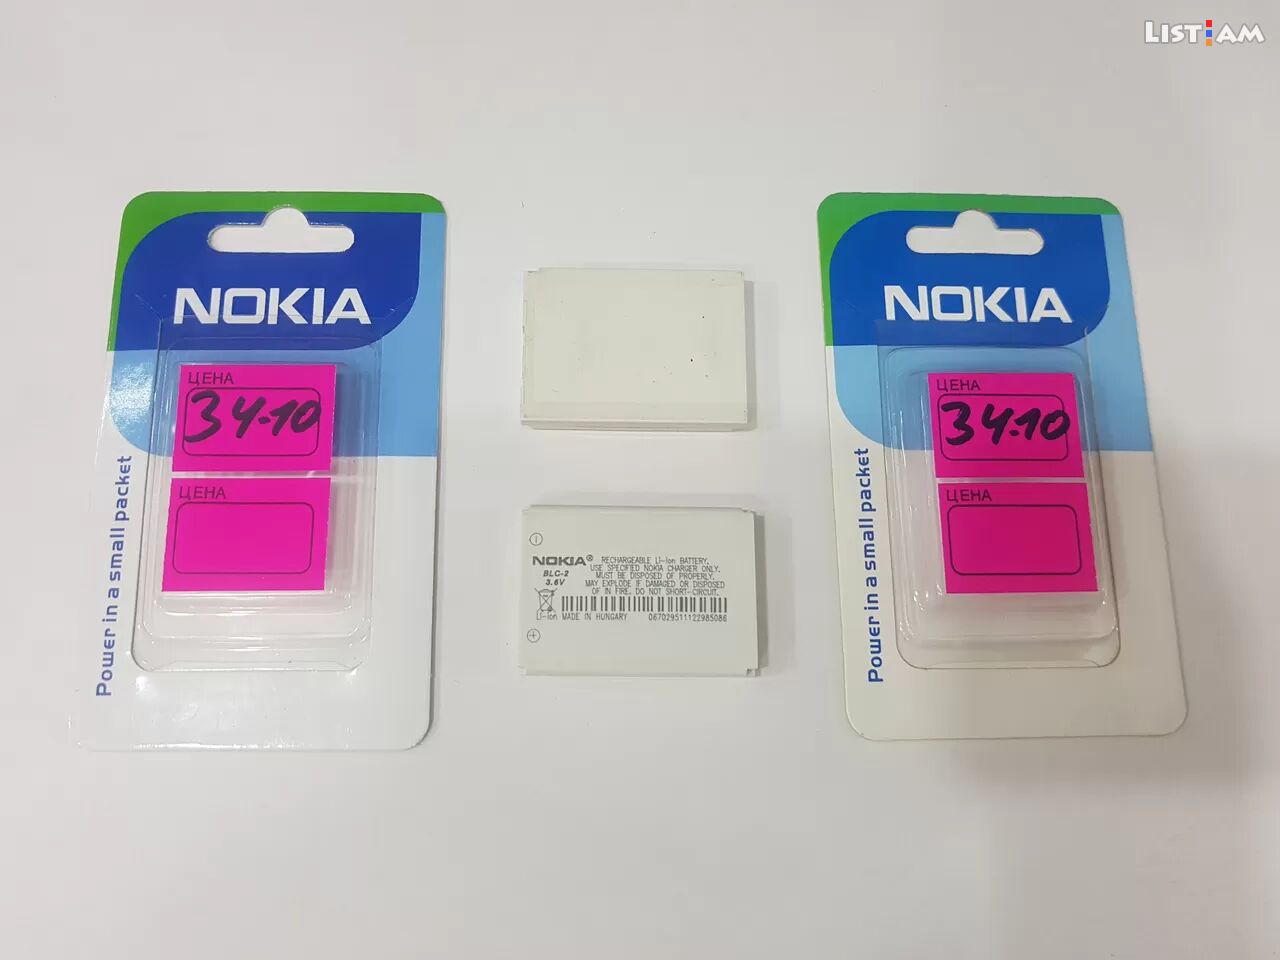 Nokia 3410 battery